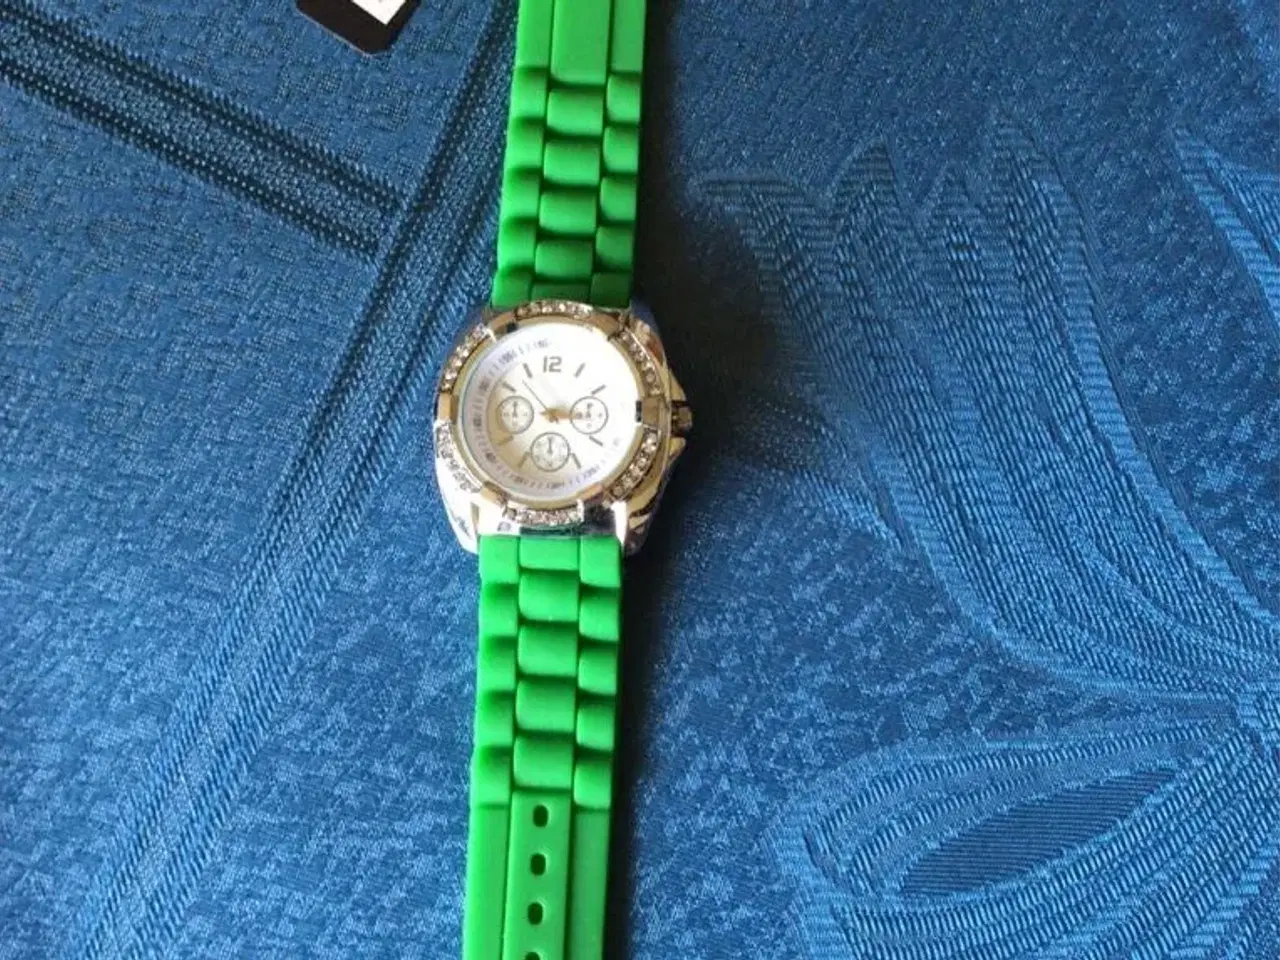 Billede 1 - Grønt armbåndsur